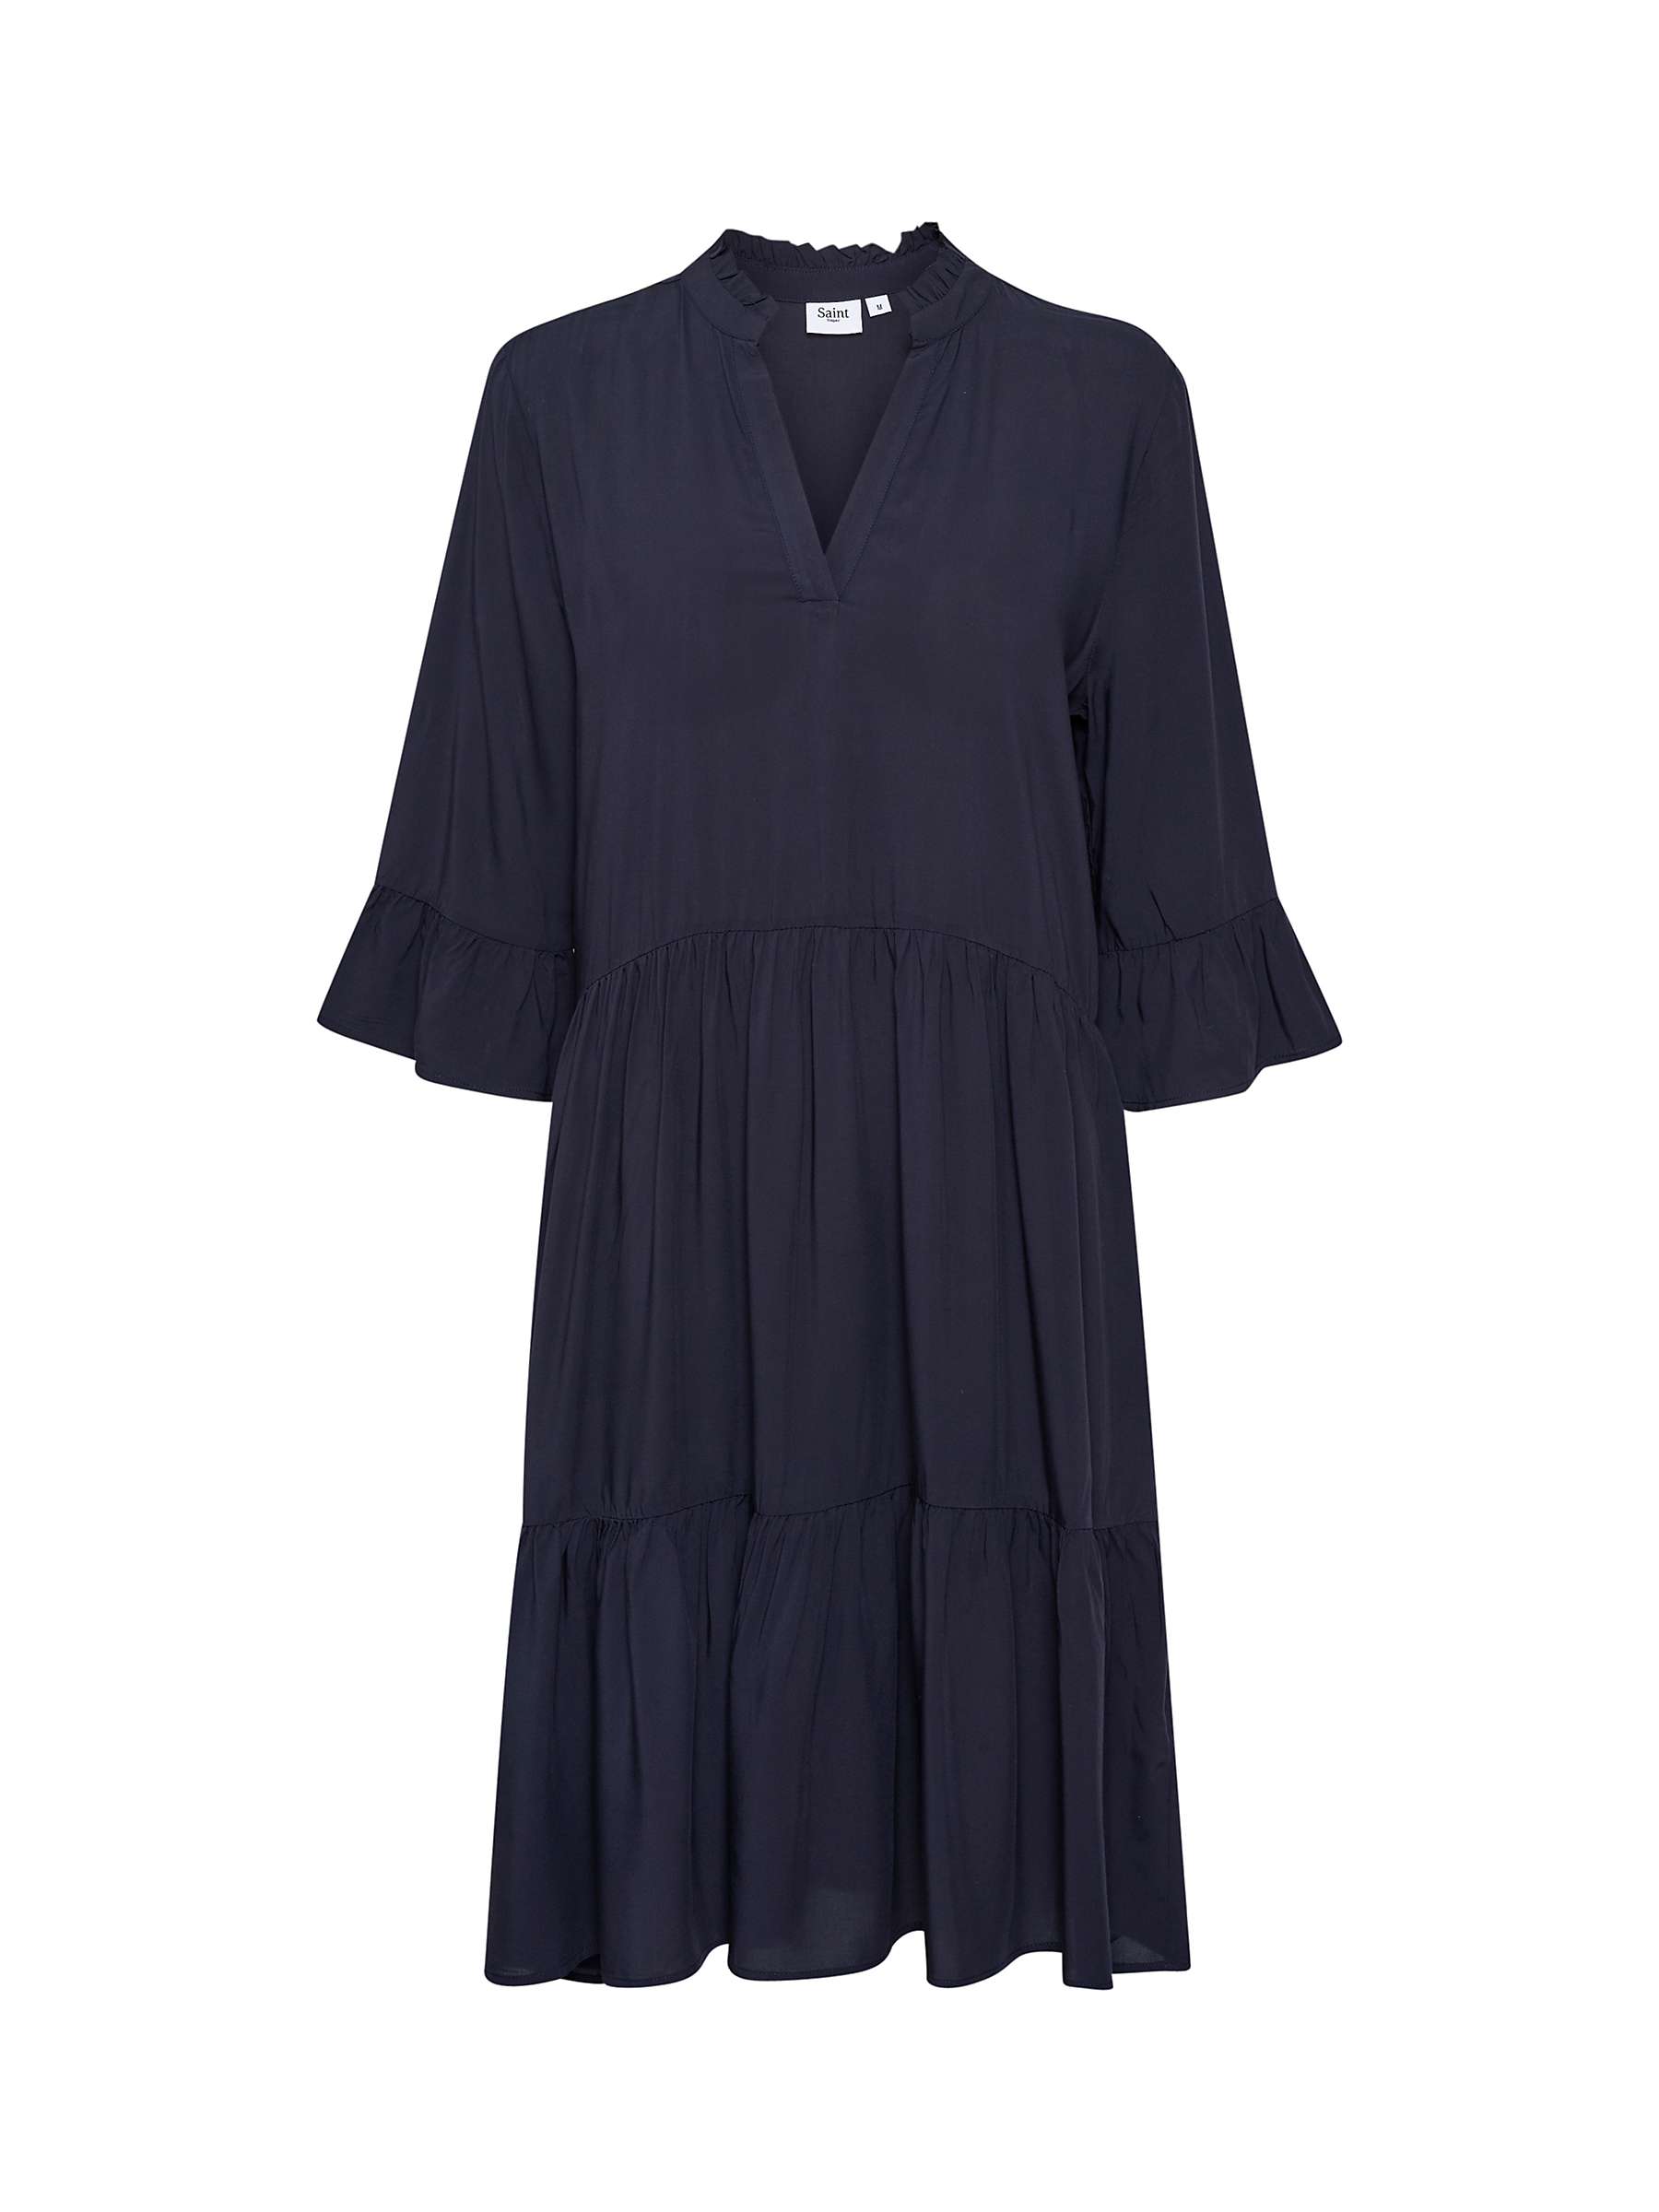 Saint Tropez Eda Monochrome Tunic Dress, Deep Blue at John Lewis & Partners